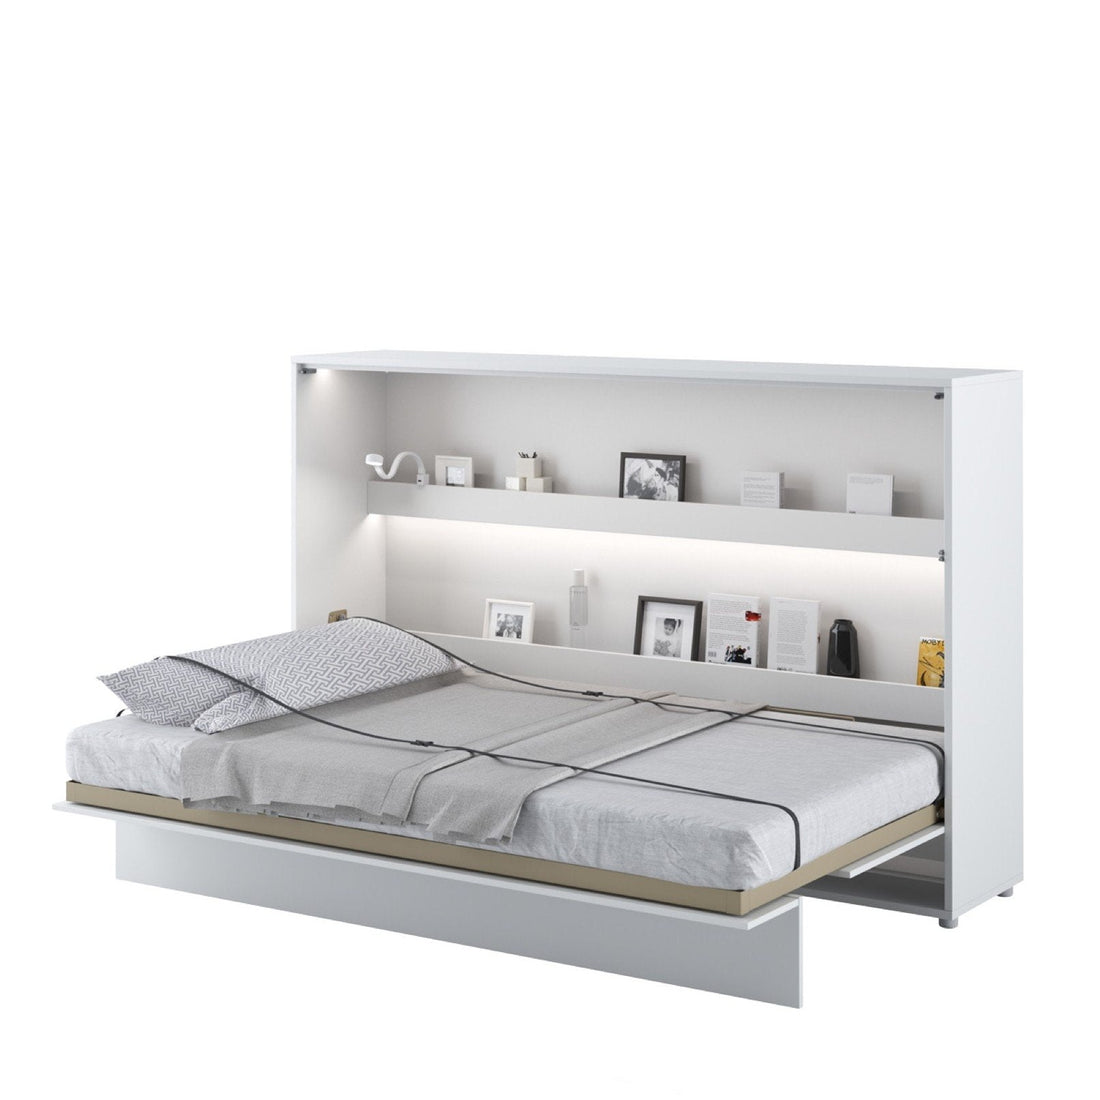 BC-05 Horizontal Wall Bed Concept 120cm - £918.0 - Wall Bed 